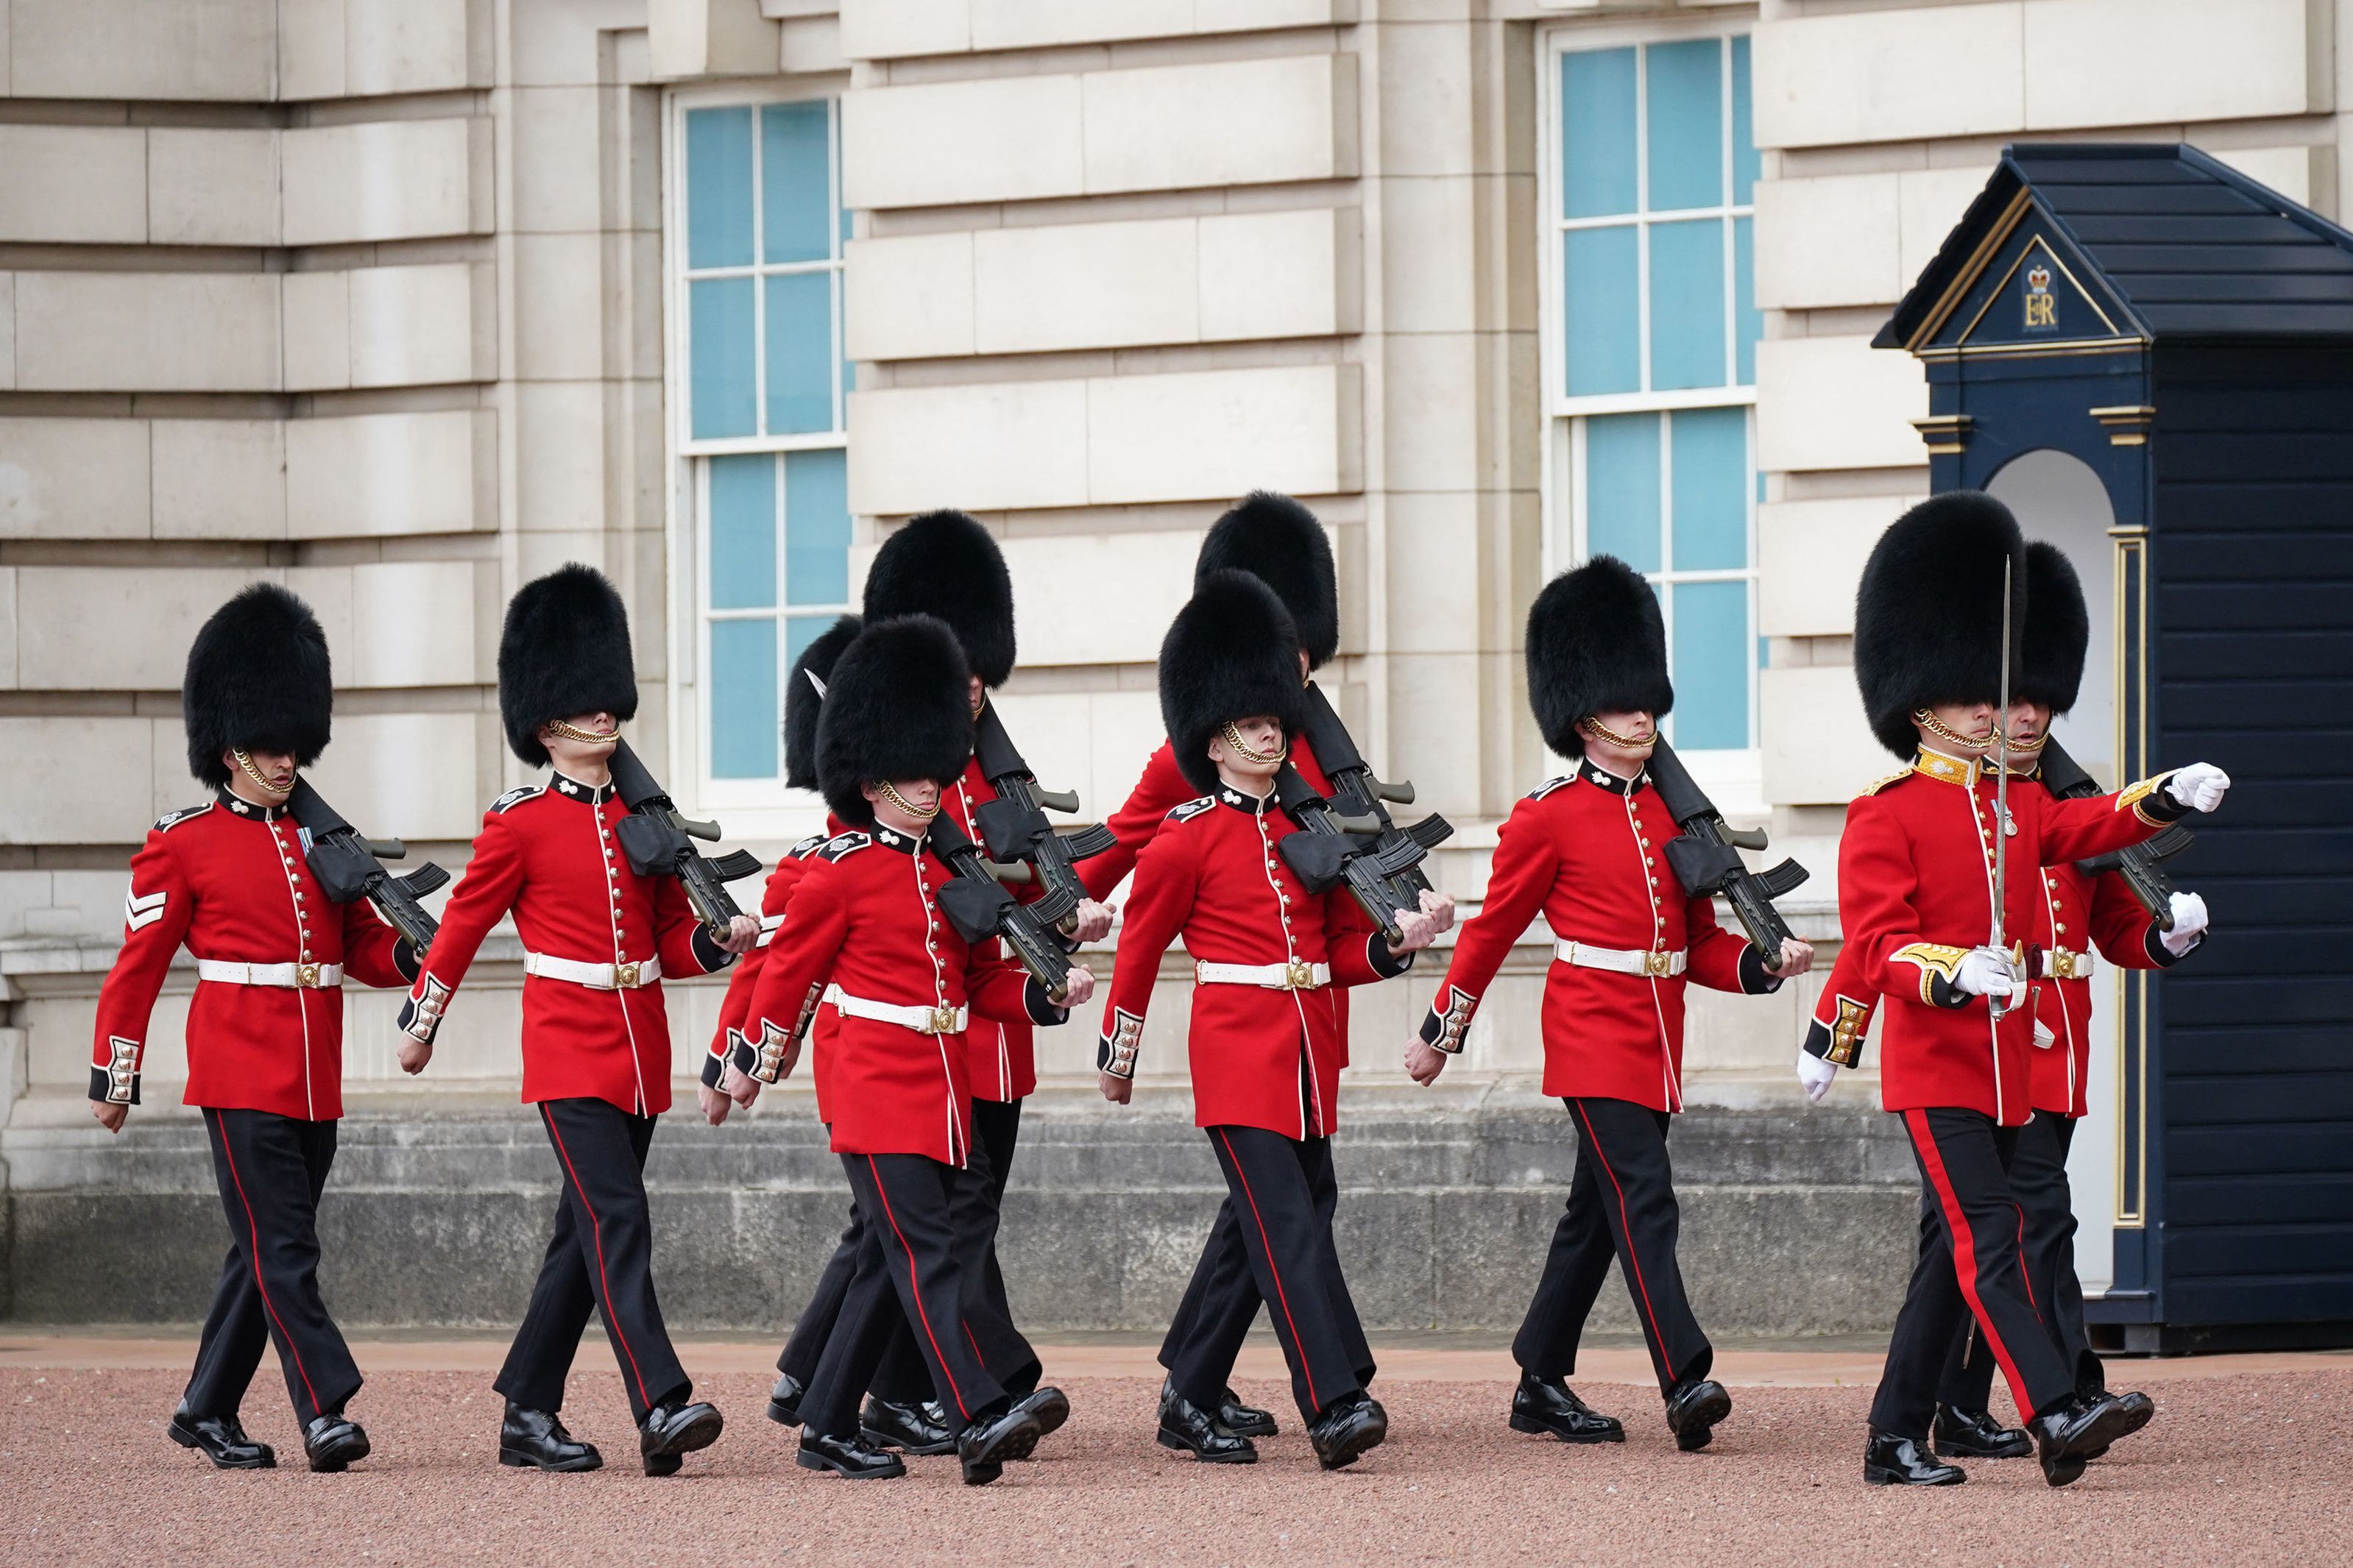 Palace Guards - The Foot Guard Uniform